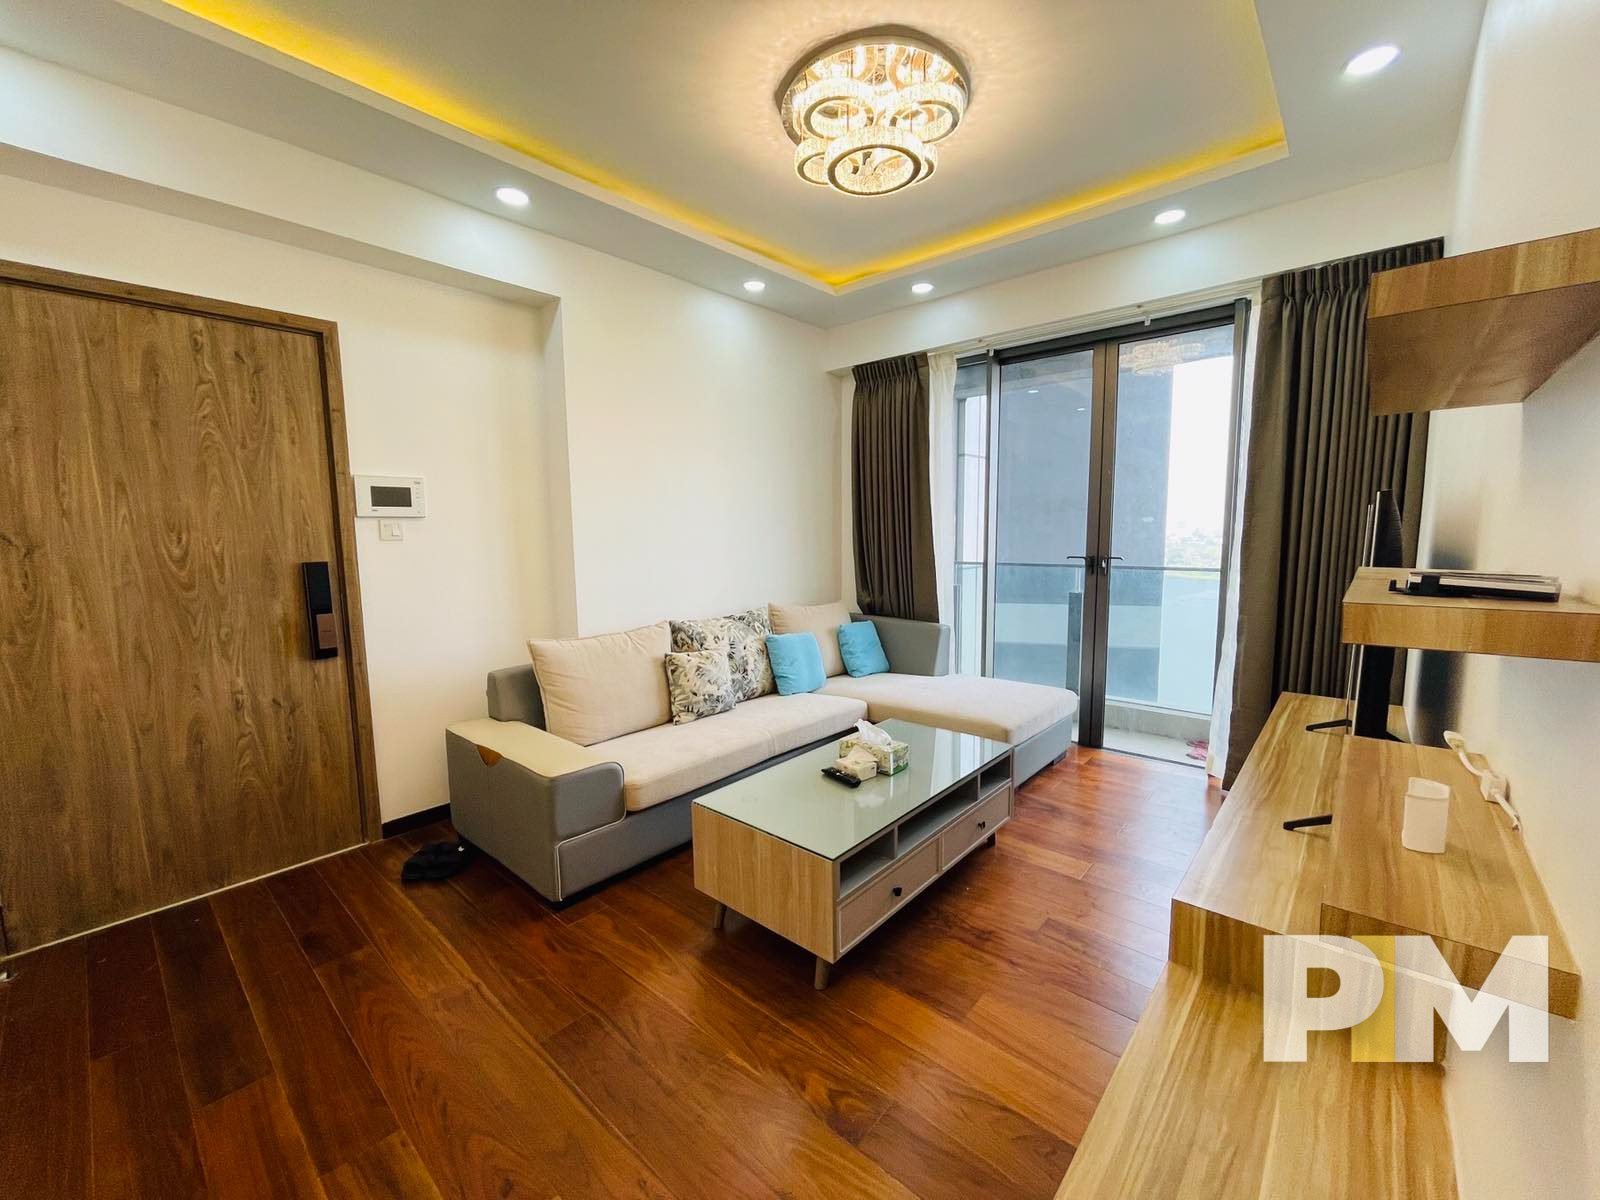 Living room - Properties in yangon